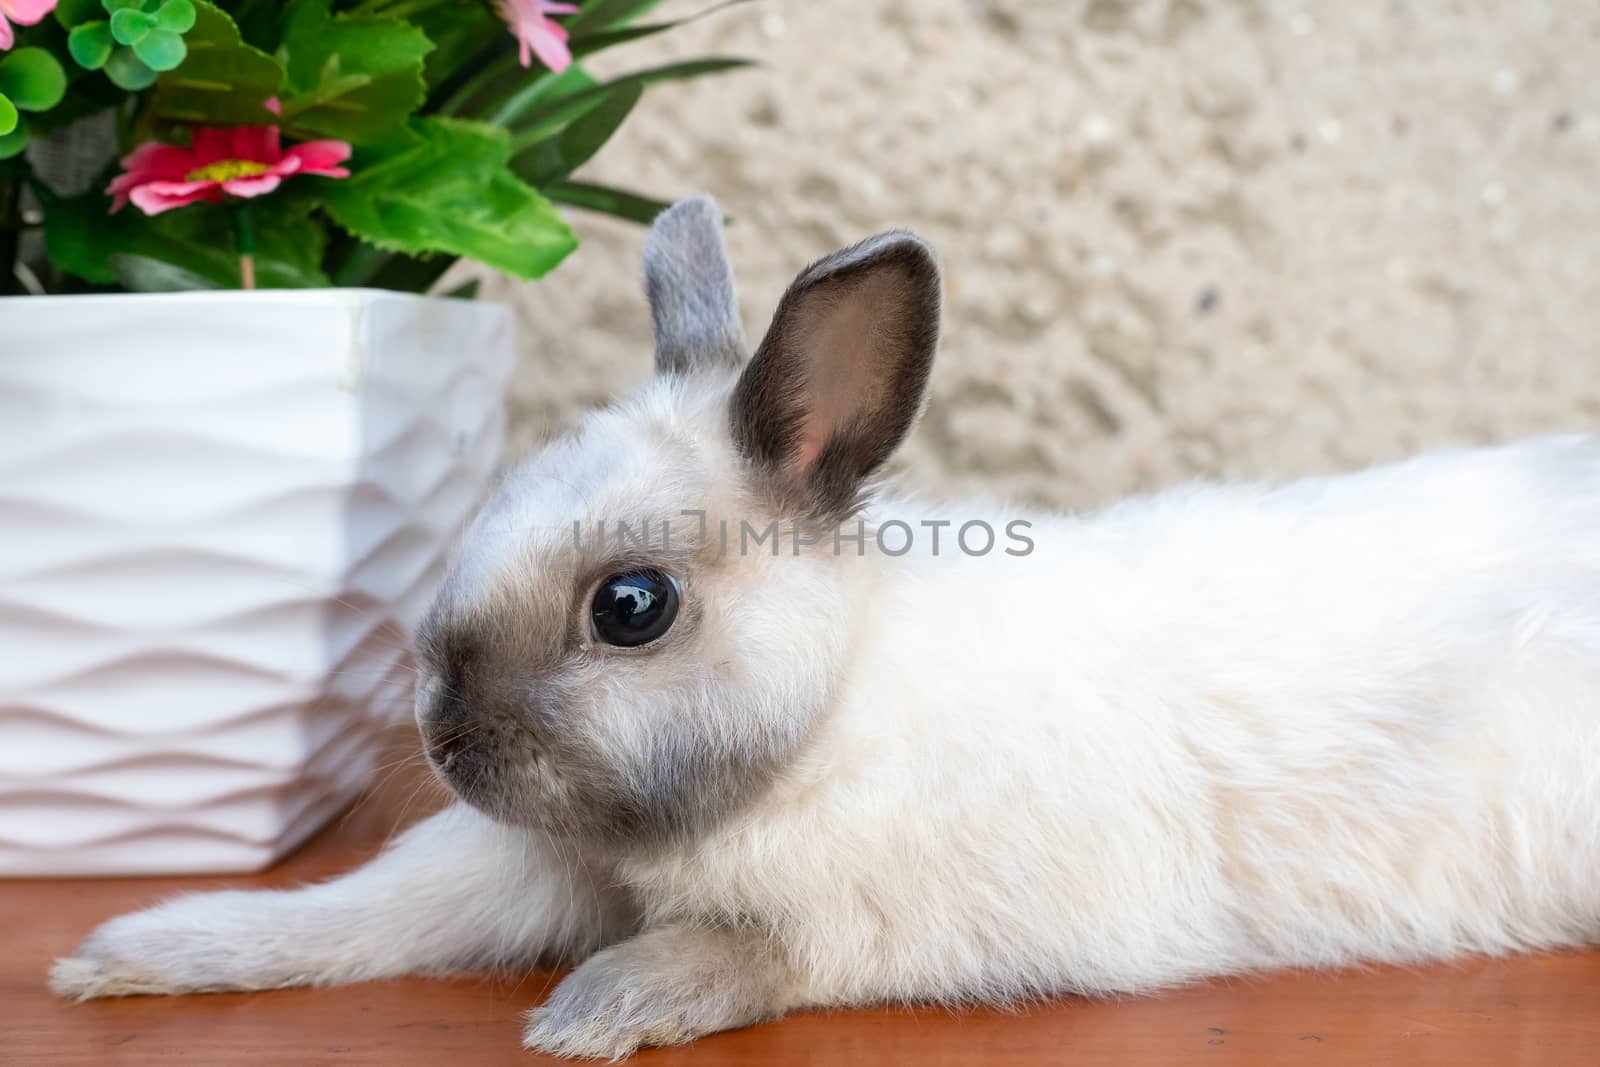 Easter bunny near spring wreath. Little dwarf rabbit sitting near flowers.